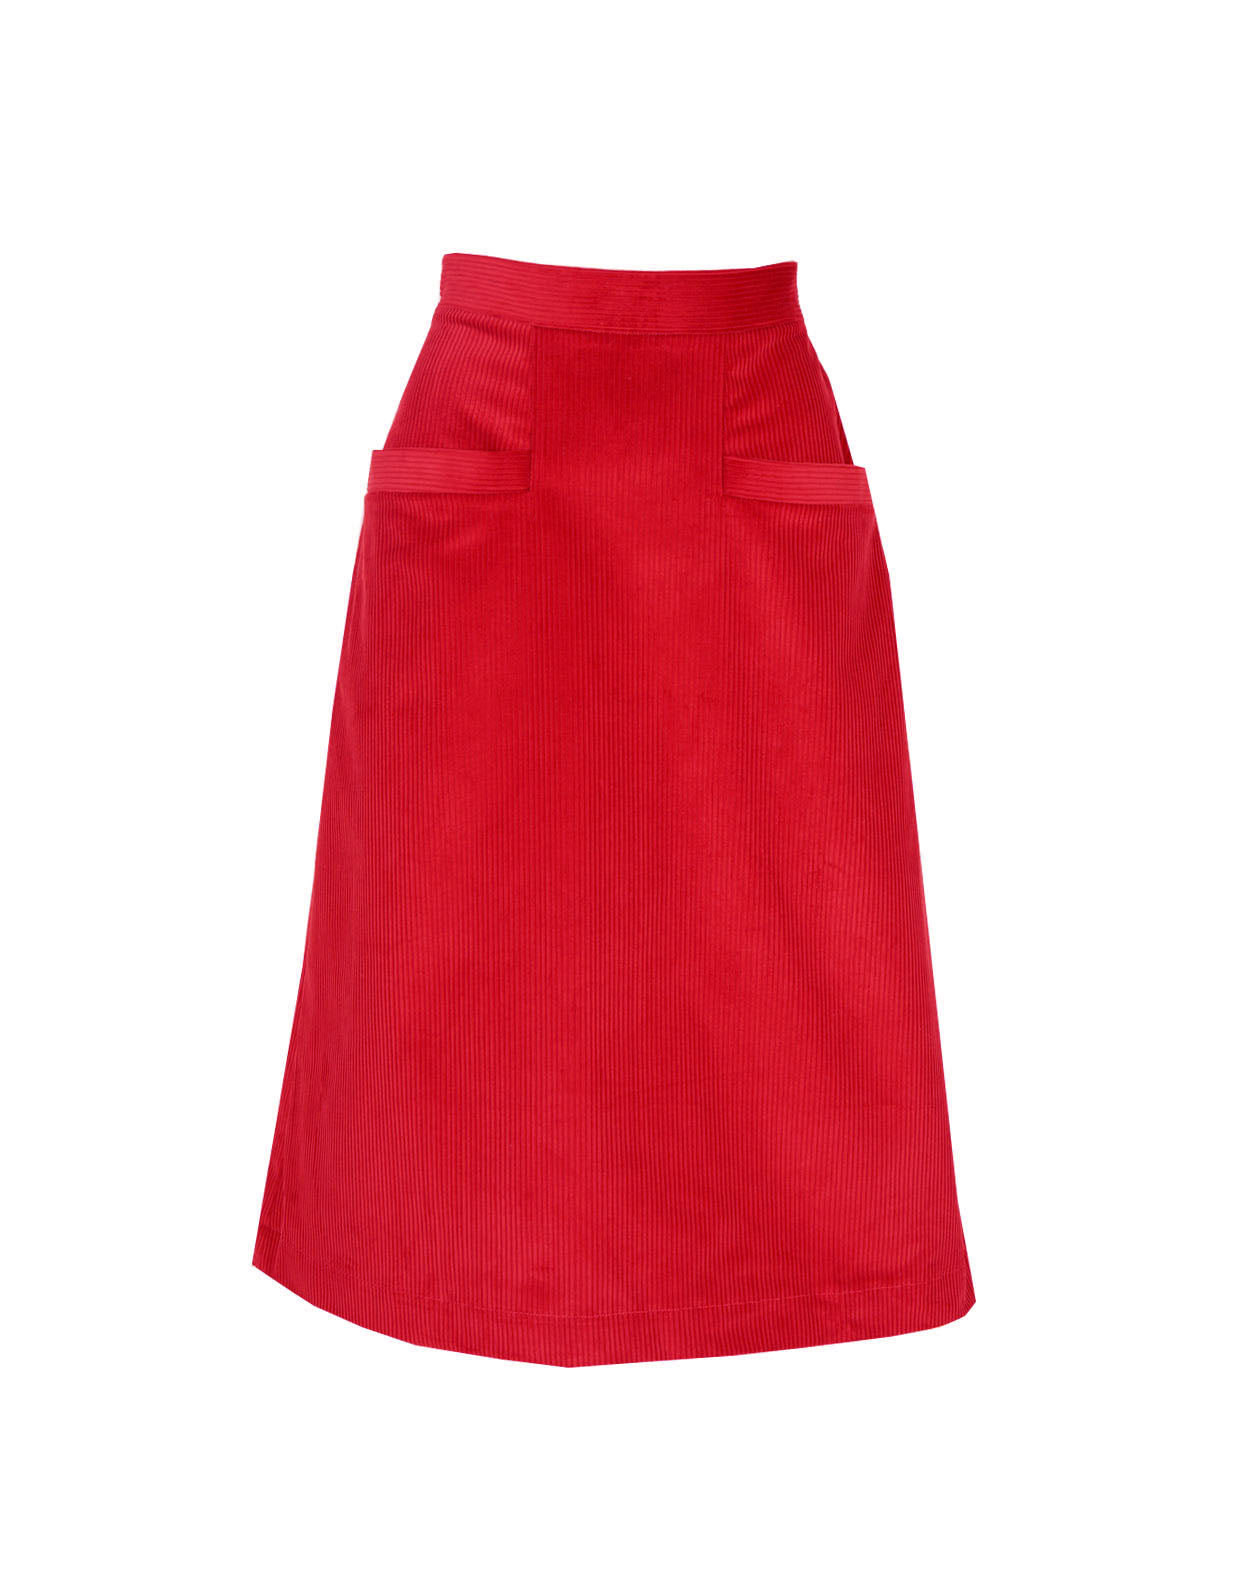 Cora - Red Corduroy Skirt